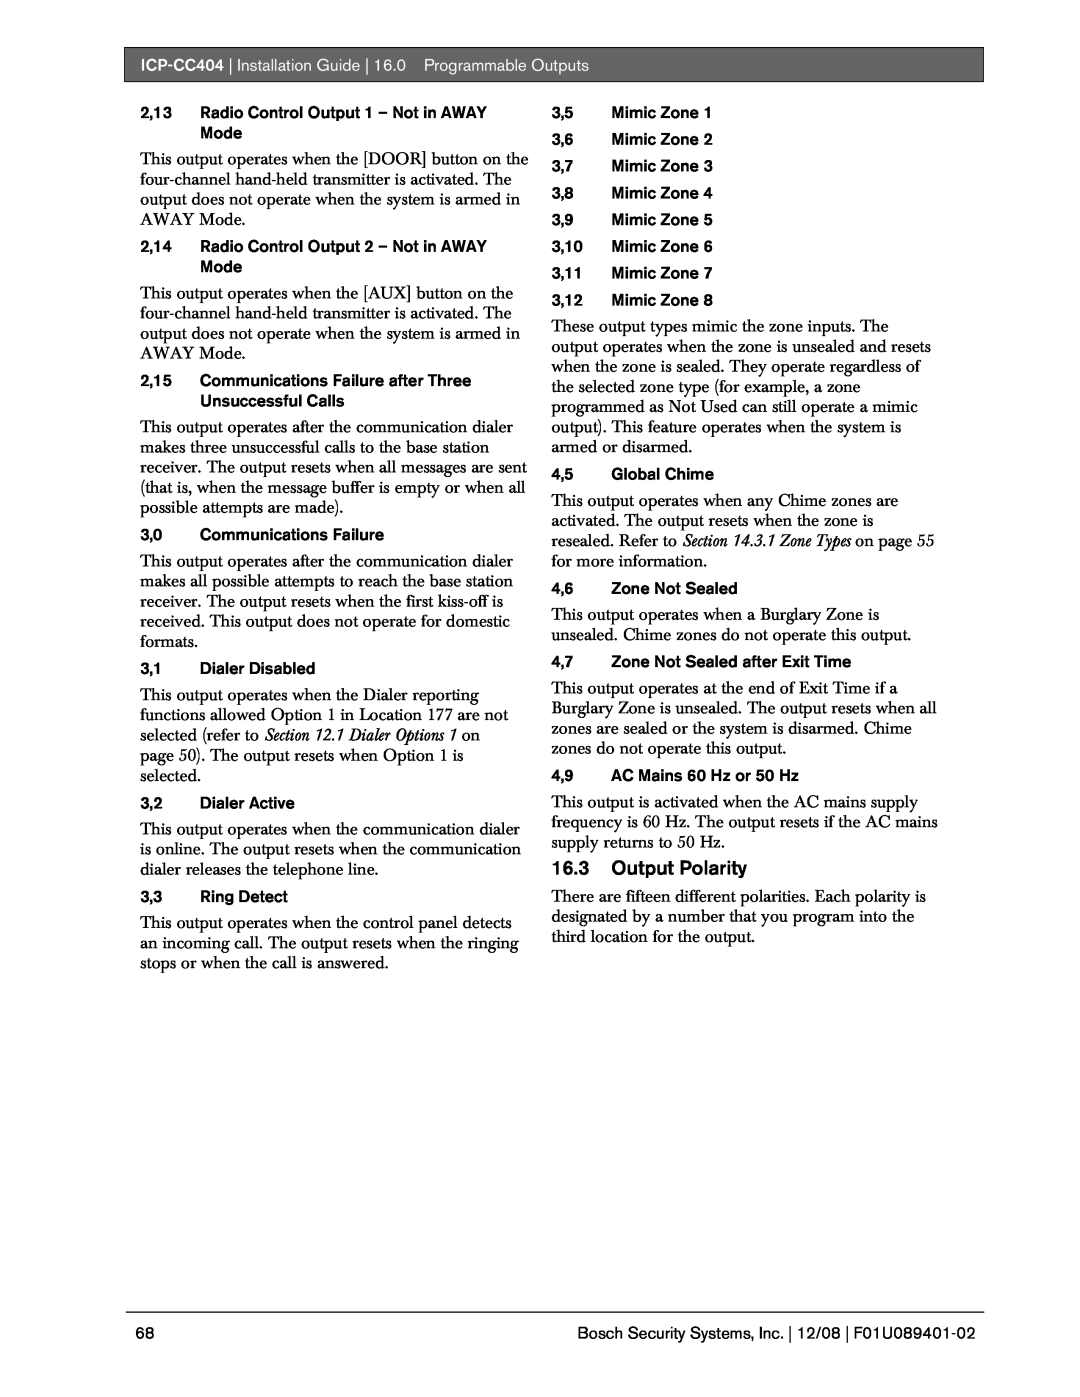 Bosch Appliances ICP-CC404 manual 16.3Output Polarity 